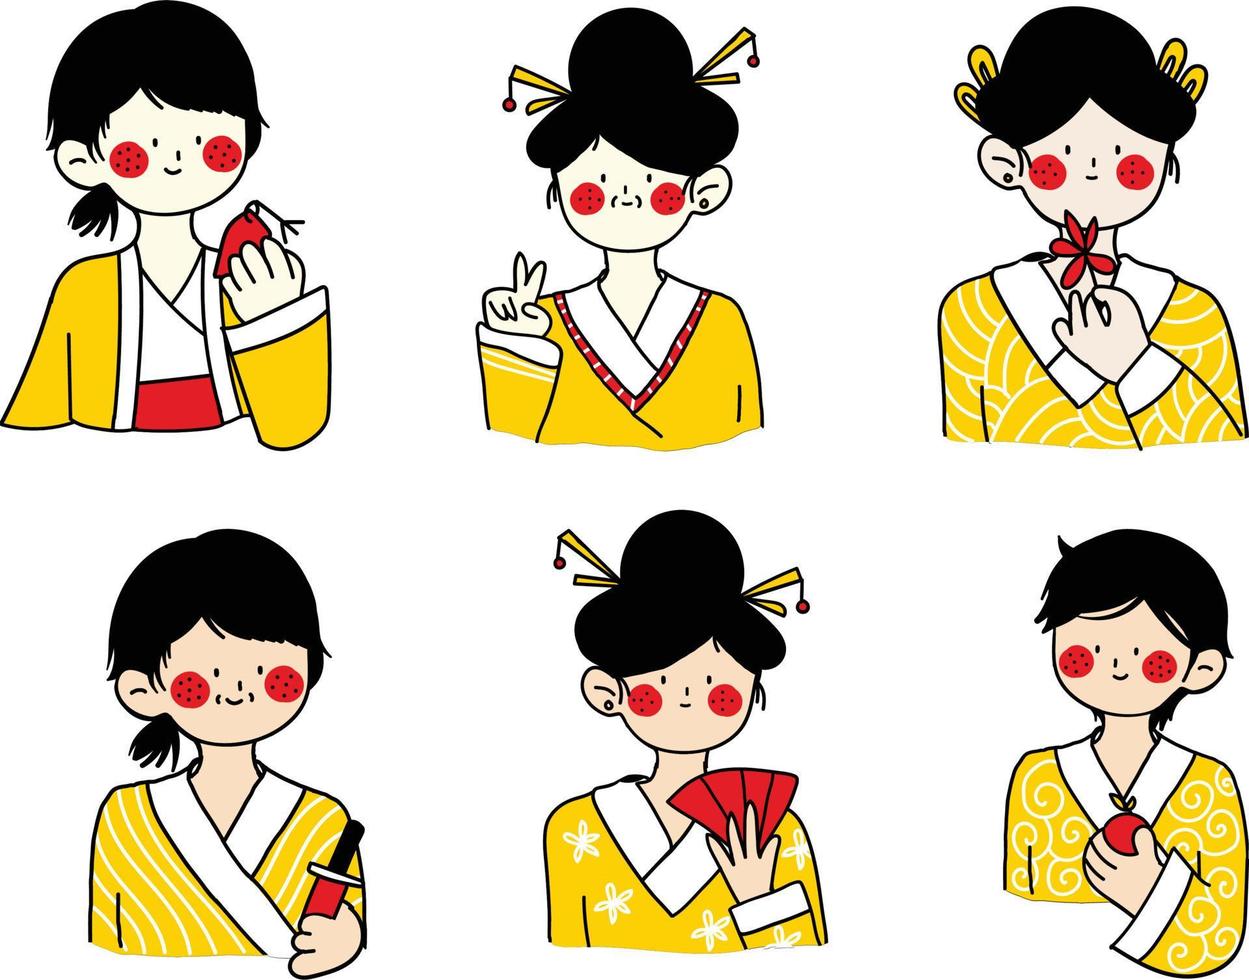 Japanese girl in kimono. Set of vector illustrations isolated on white background.